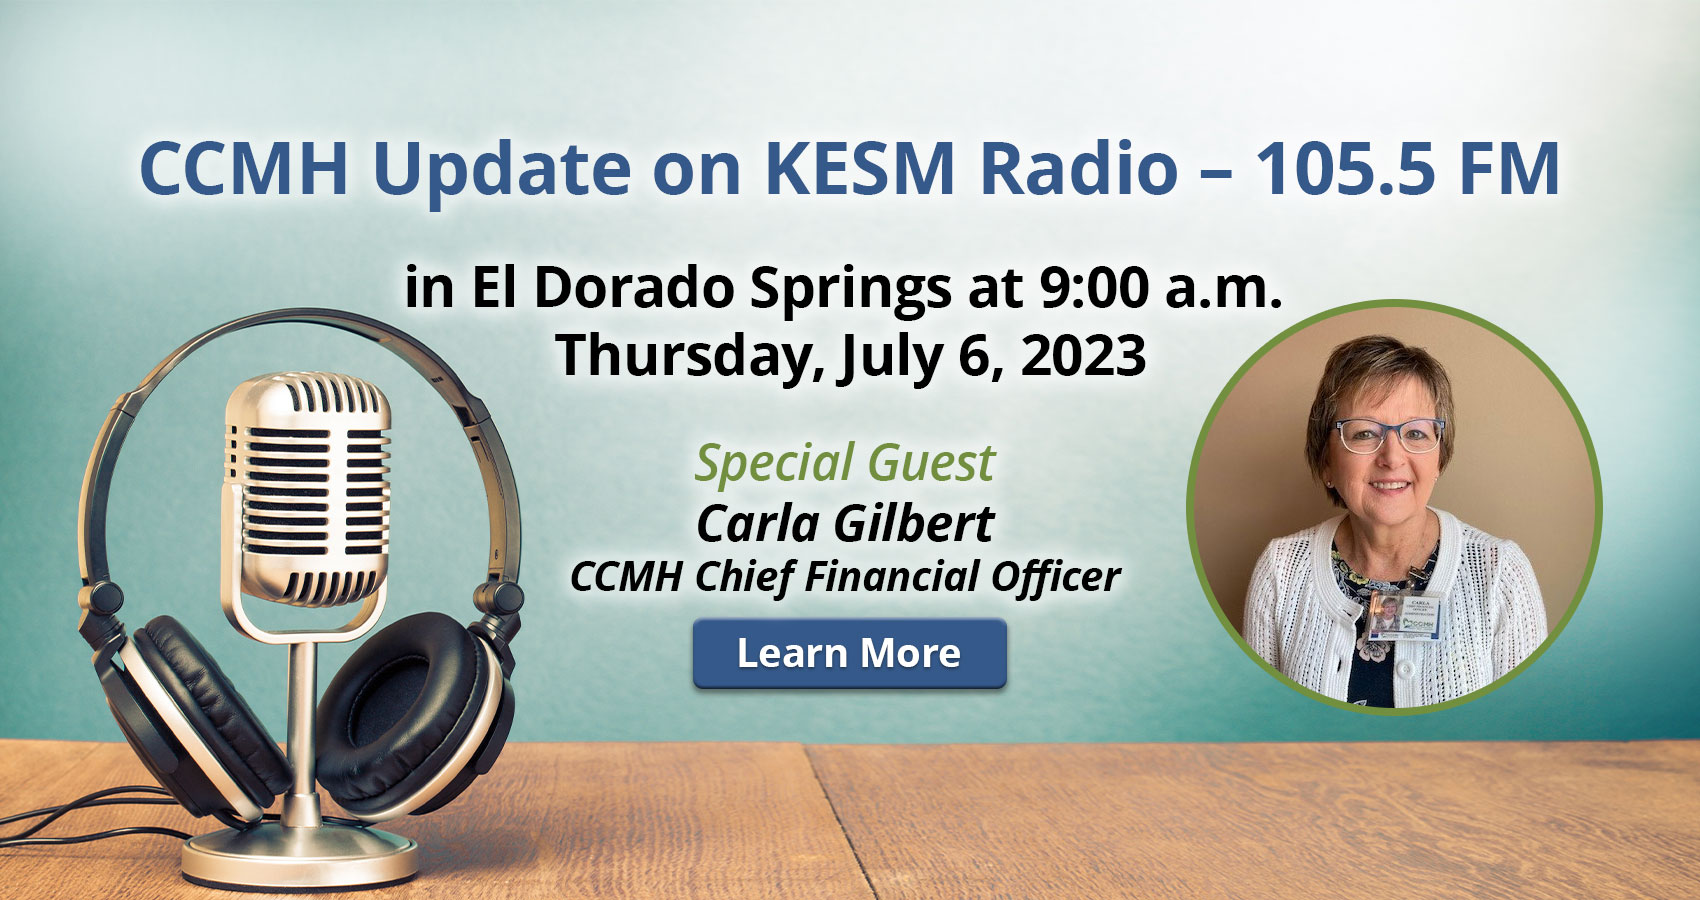 CCMH Update on KESM Radio - 105.5 FM
in El Dorado Springs at 9:00 a.m.
Thursday, June 15, 2023 
Special Guest Josh McClellan